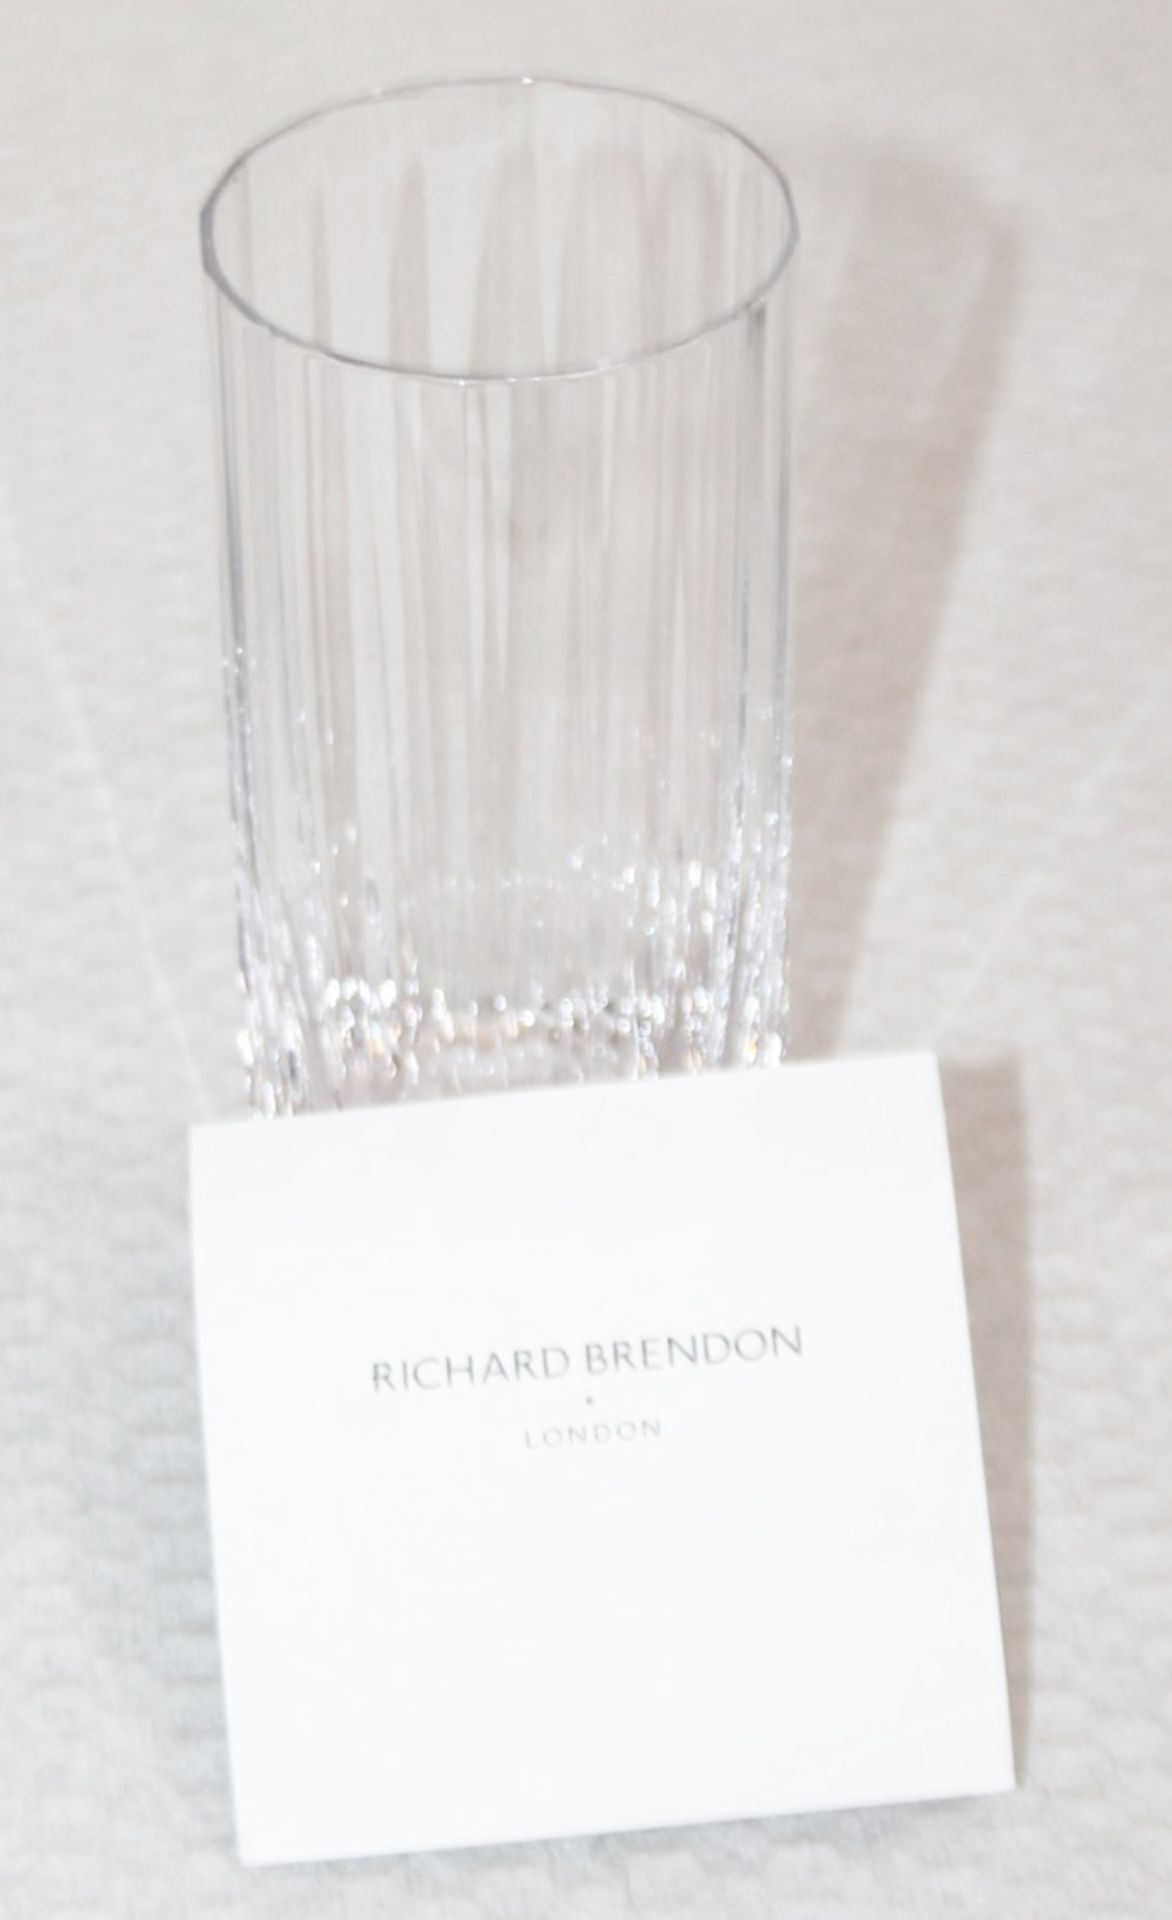 1 x RICHARD BRENDON Fluted Handmade Crystal Highball Glass (380ml) - Original Price £90.00 - - Image 5 of 8